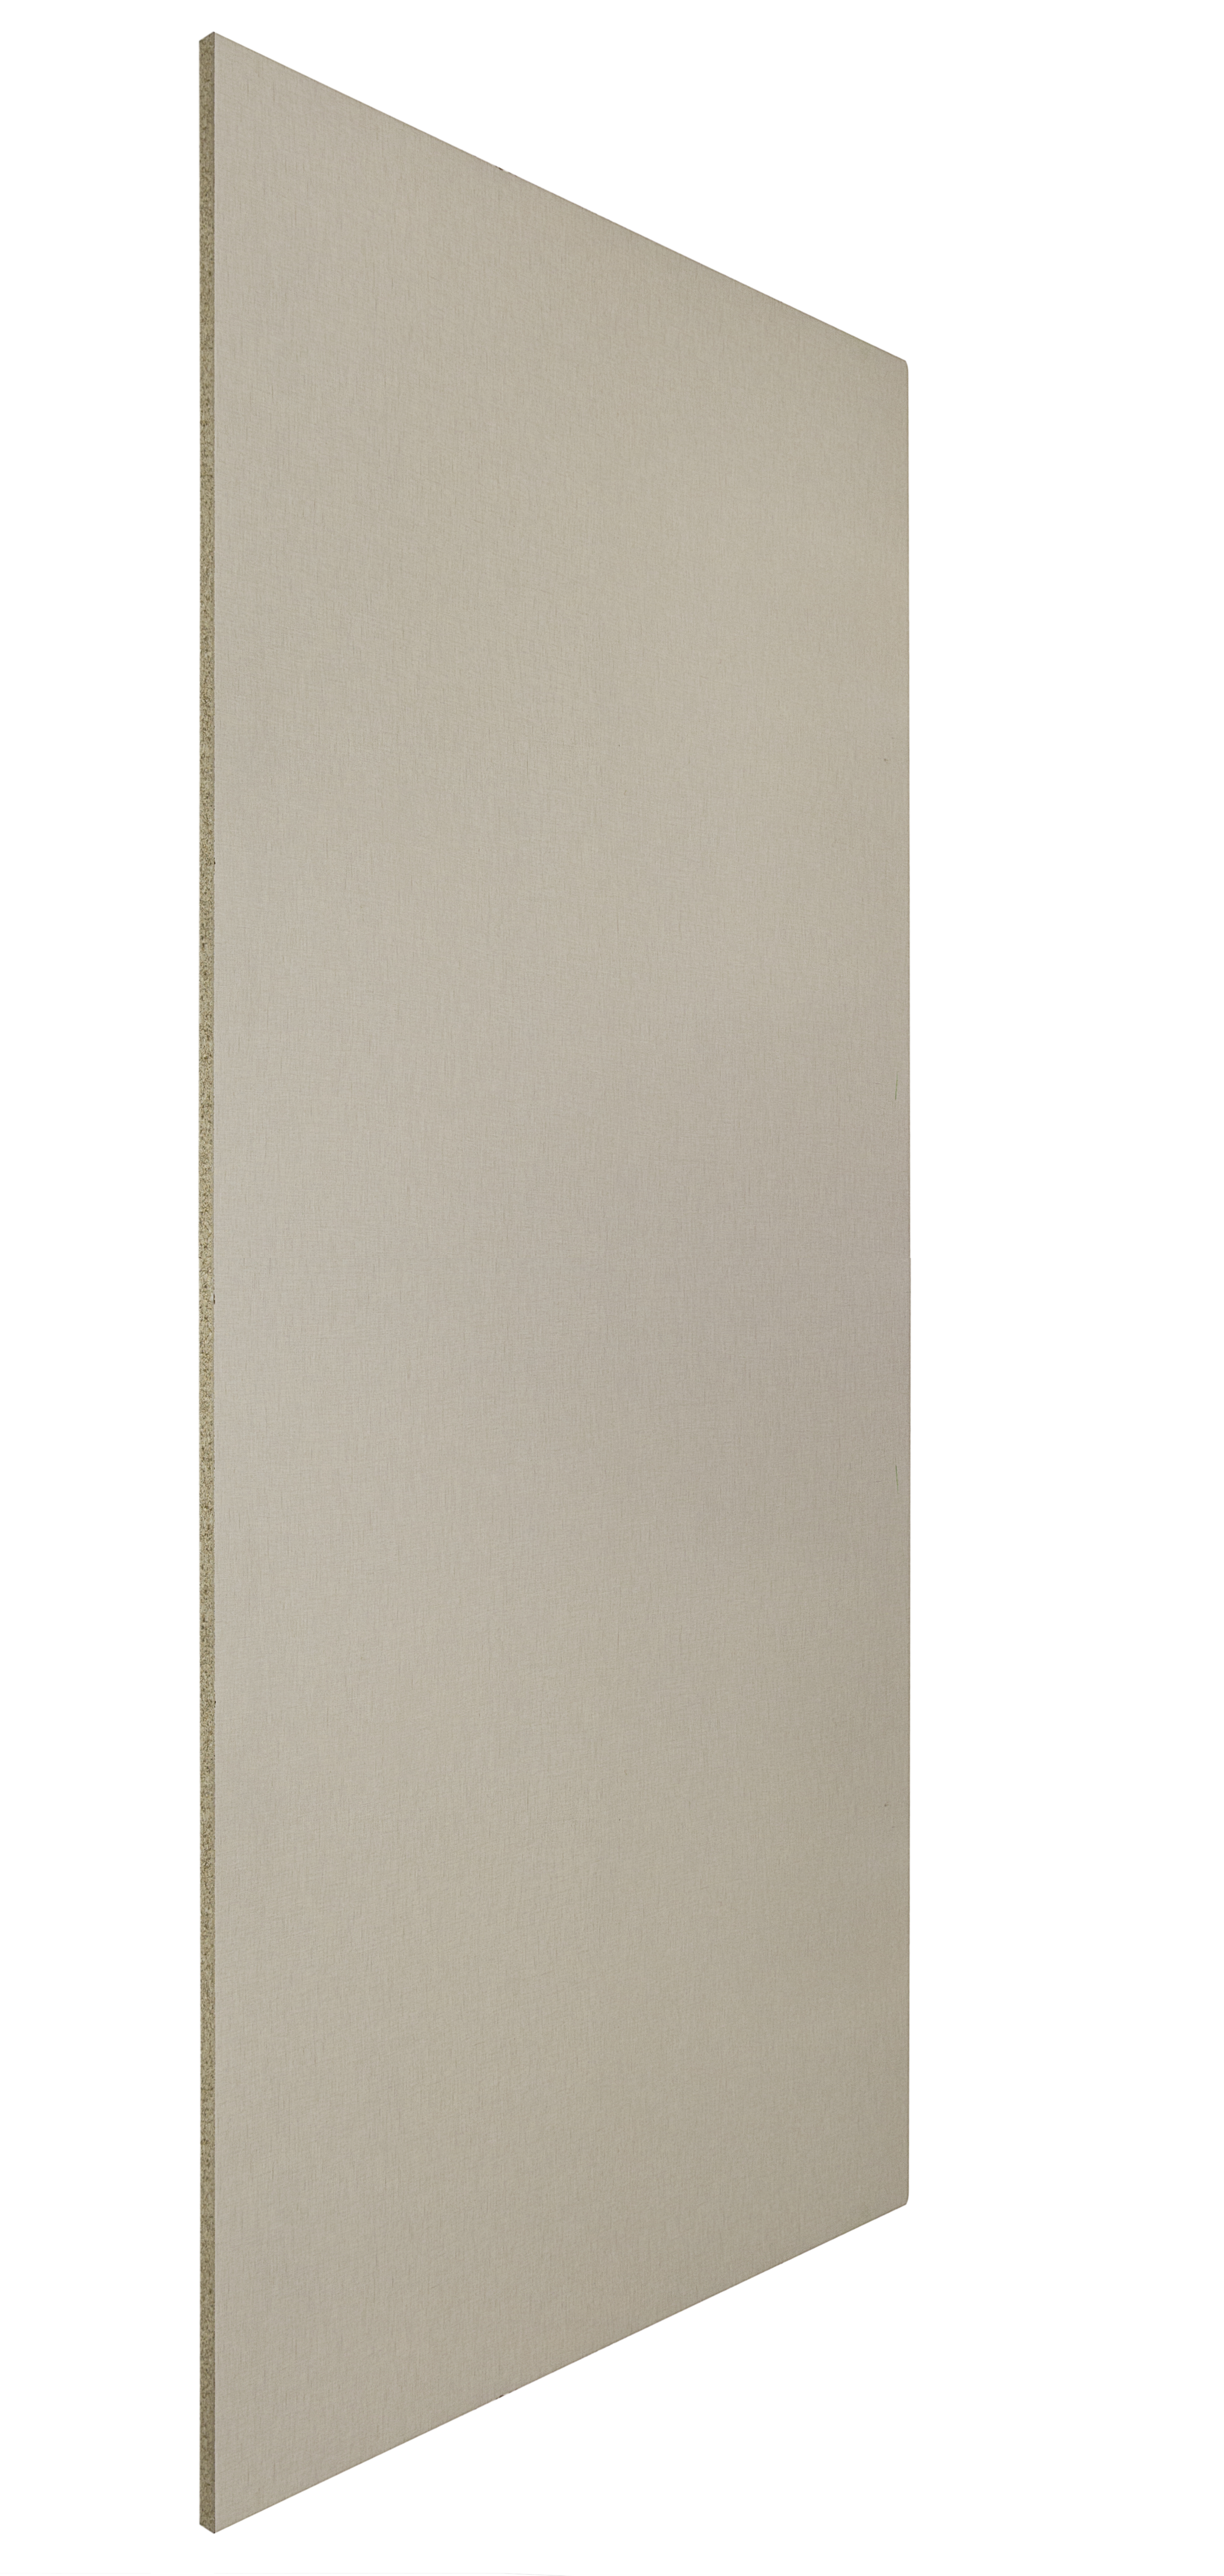 Tablero aglomerado de melamina lino cancún de 122x244x2,5 cm (anchoxaltoxgrosor)